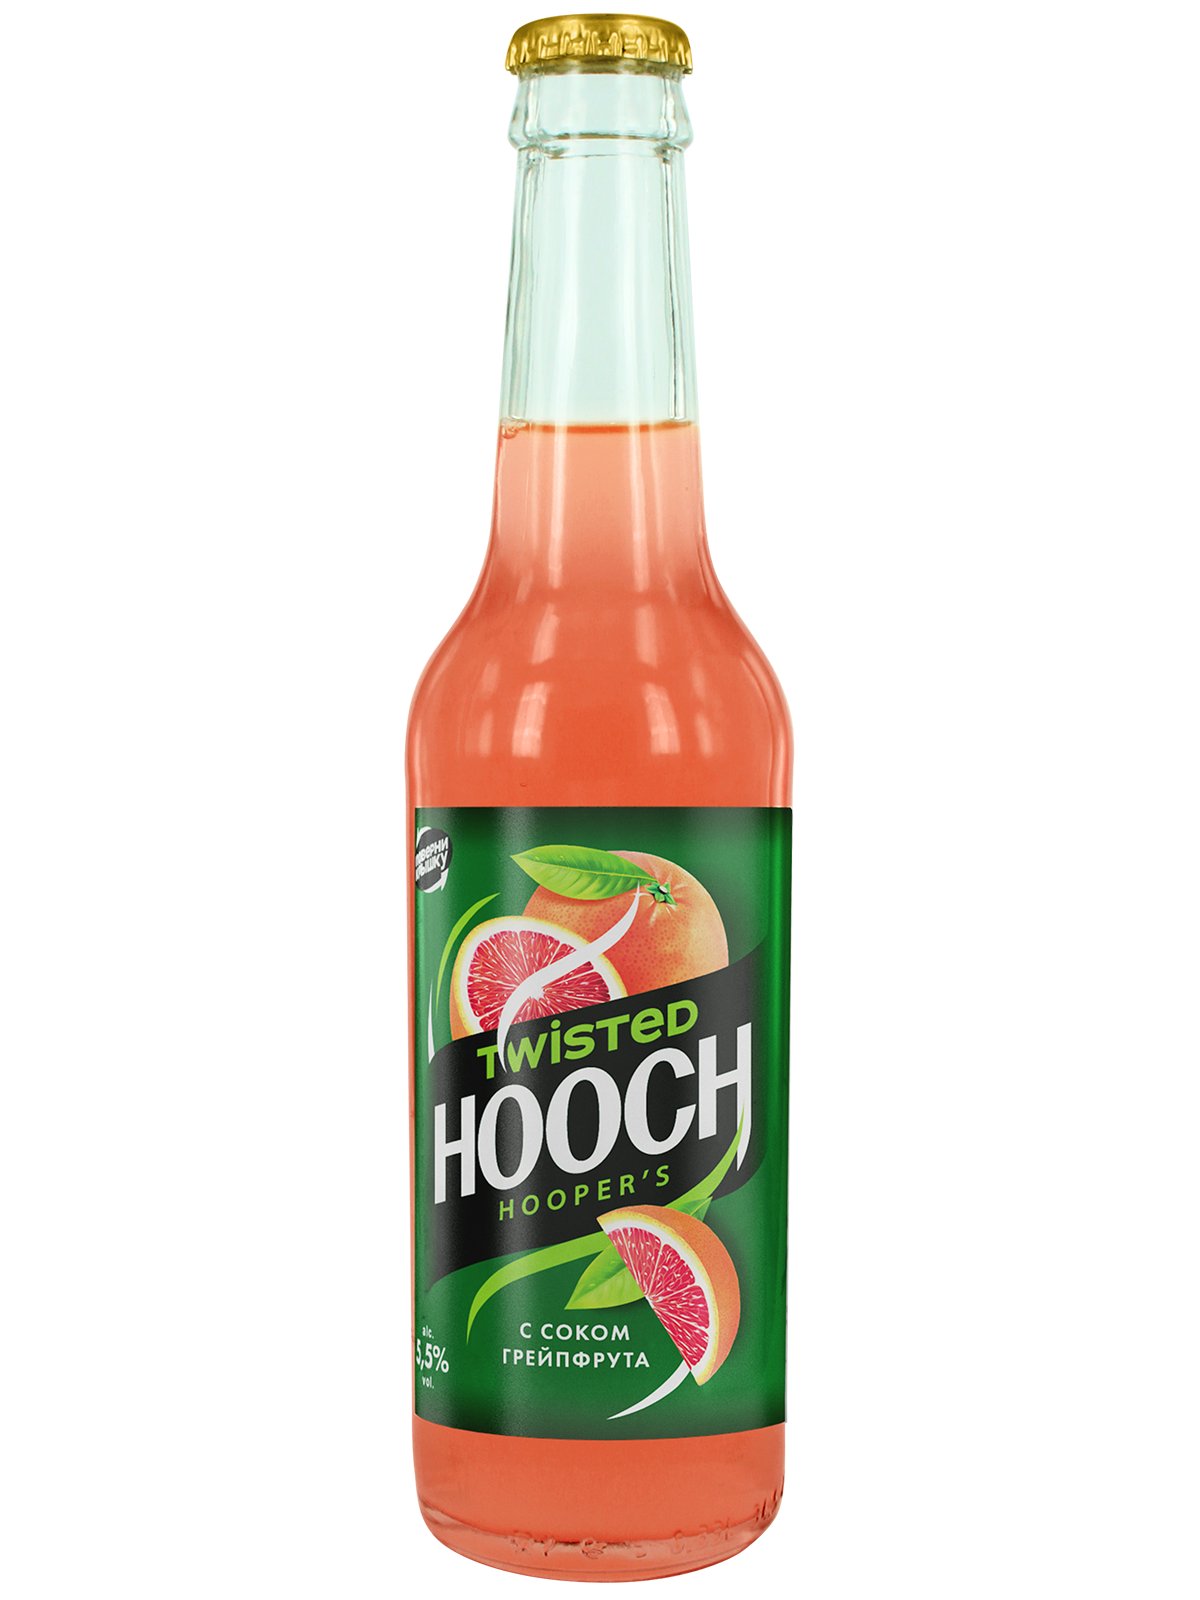 Hooch грейпфрут. Коктейль Хуч грейпфрут. Алкогольный напиток с грейпфрутом Hooch. Пиво Hooch грейпфрут.